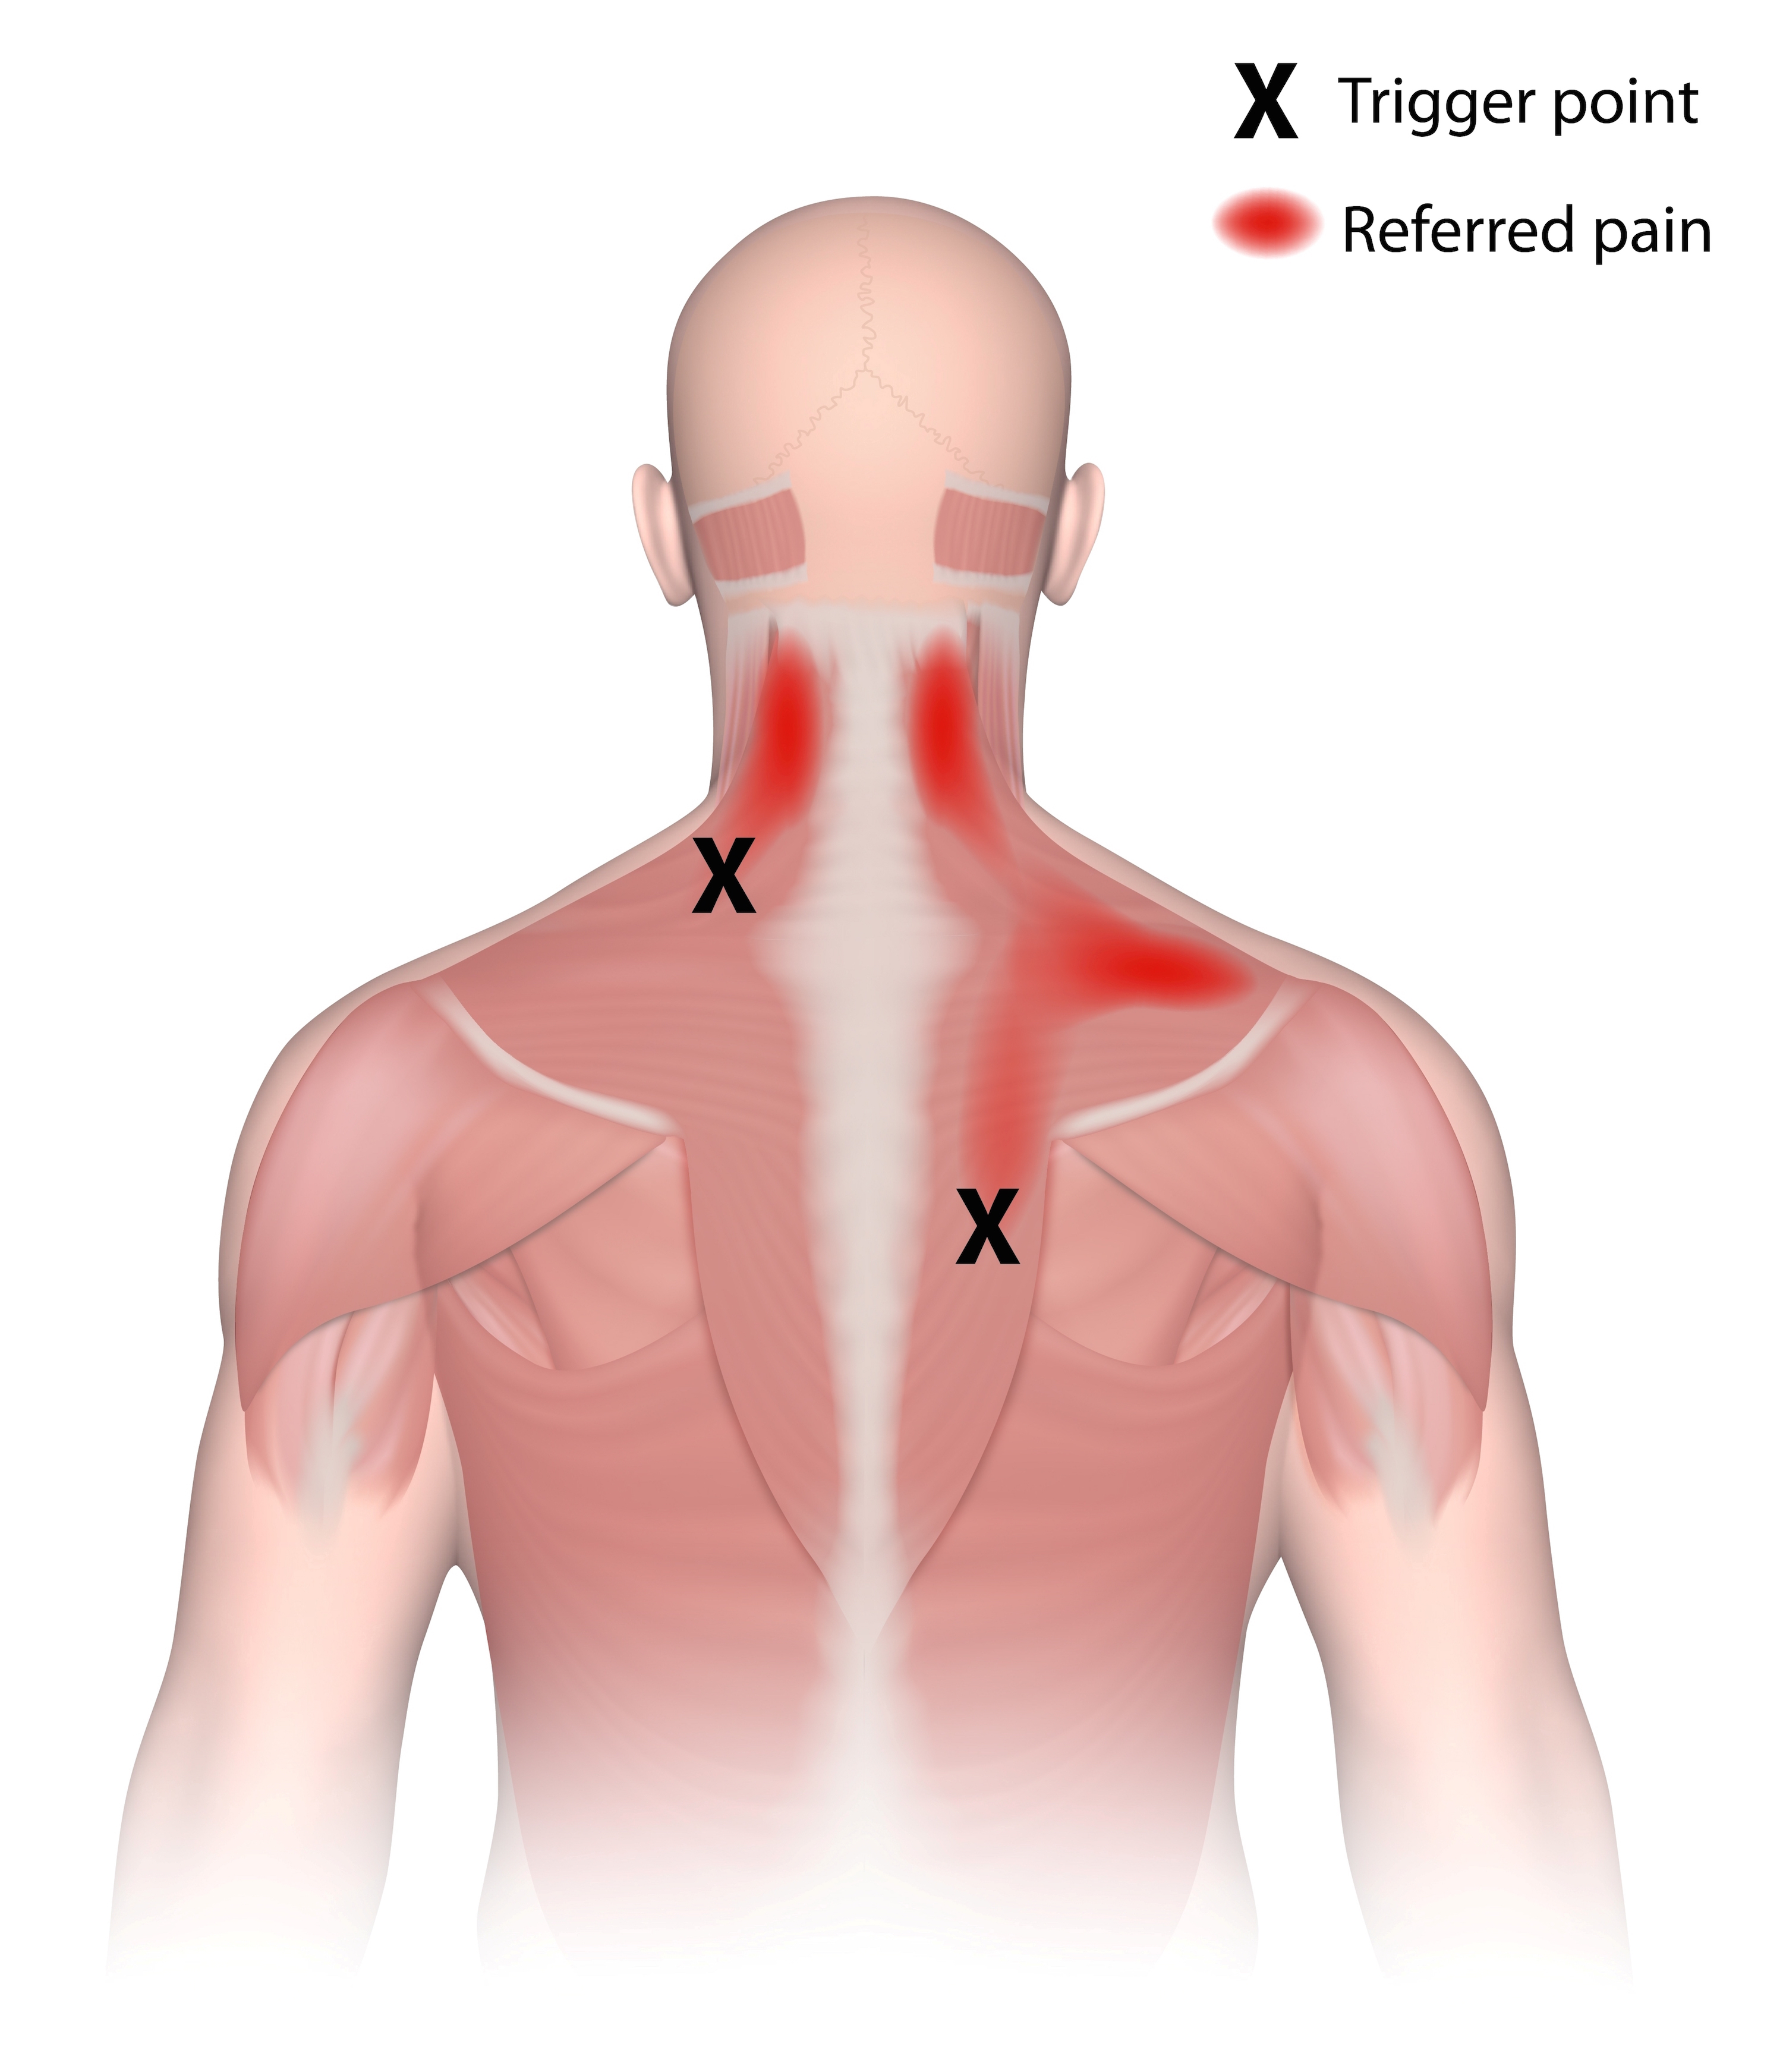 psoas pain referral pattern